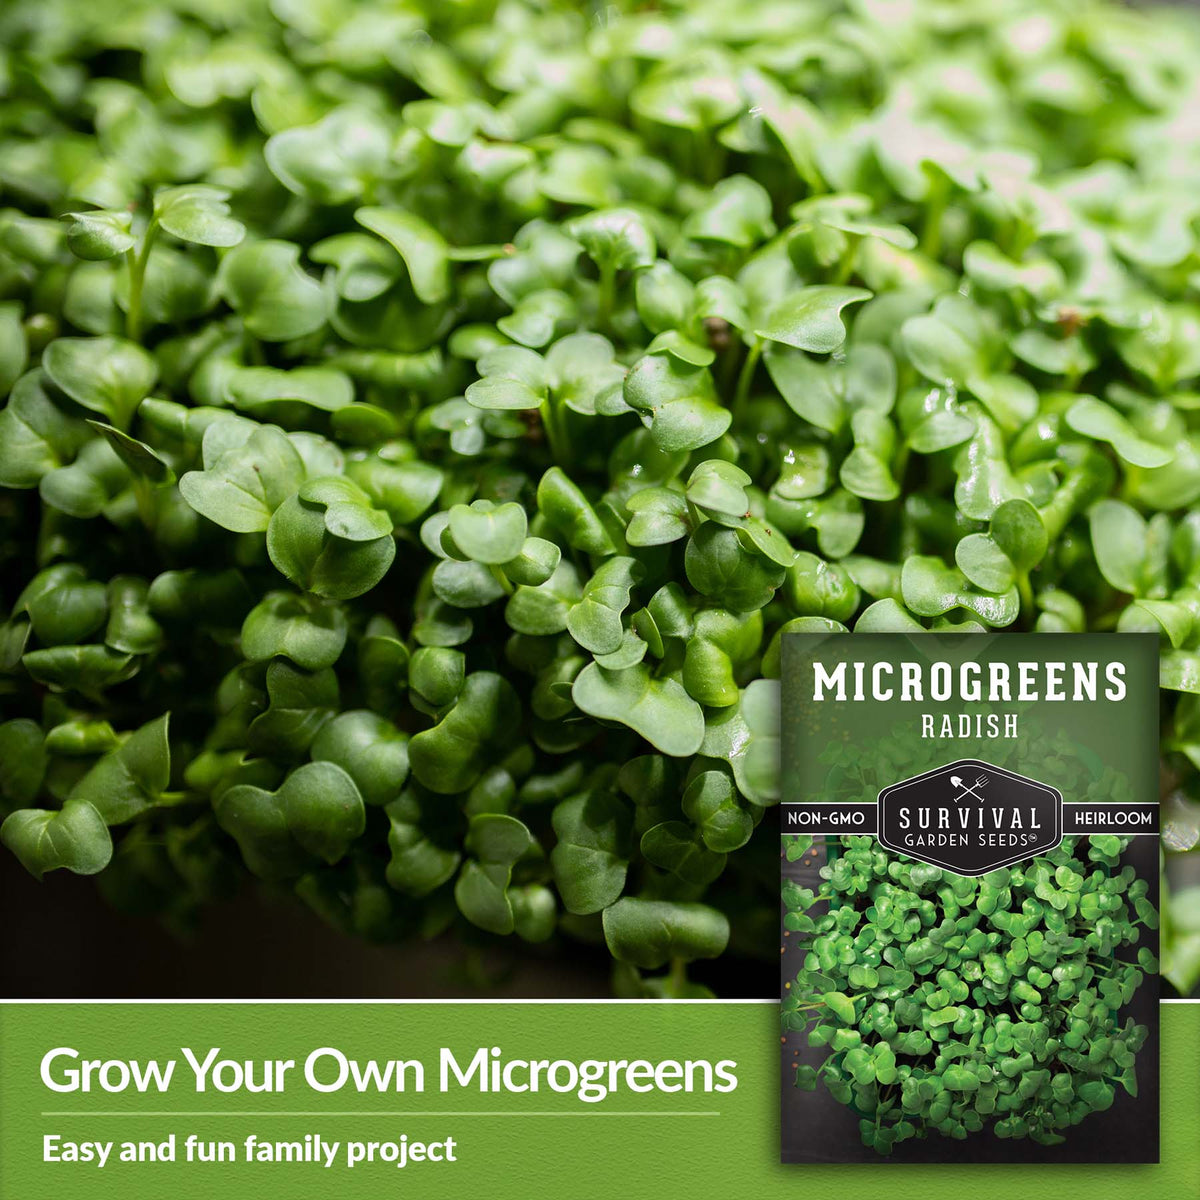 Grow your own microgreens